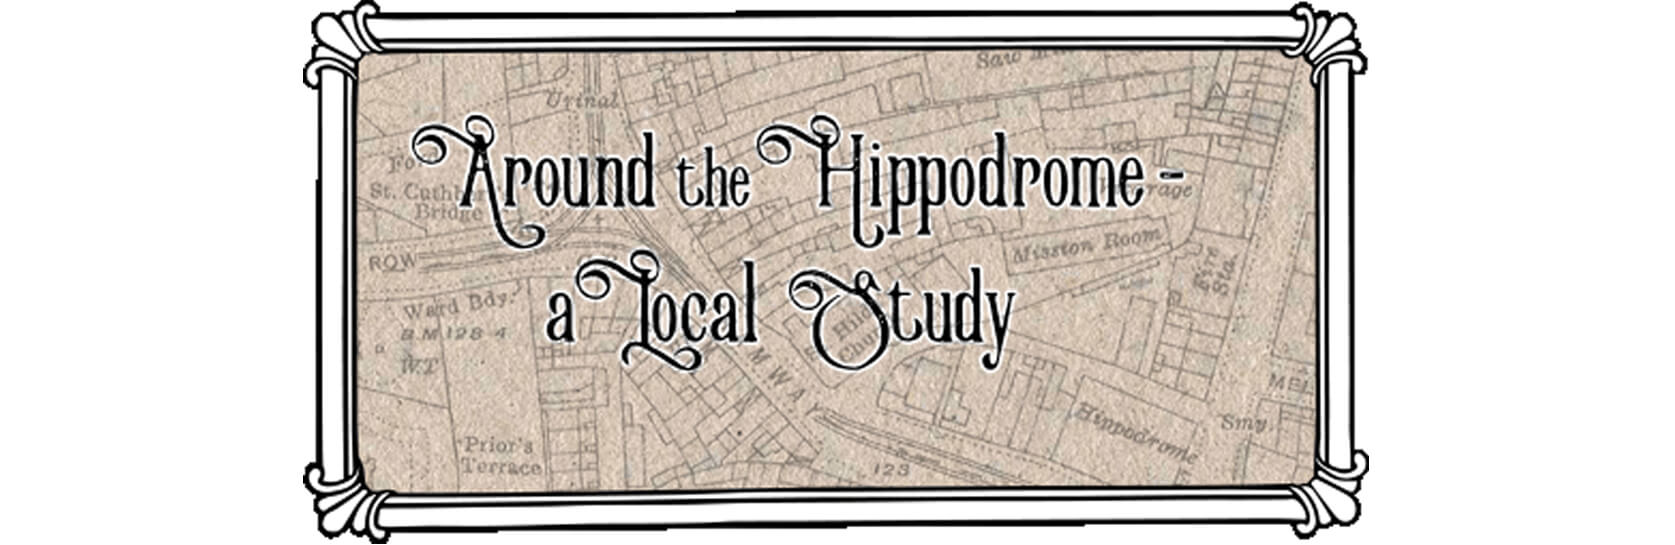 Darlington Hippodrome Teacher Notes - Topic 4 - Around the Hippodrome - A Local Study